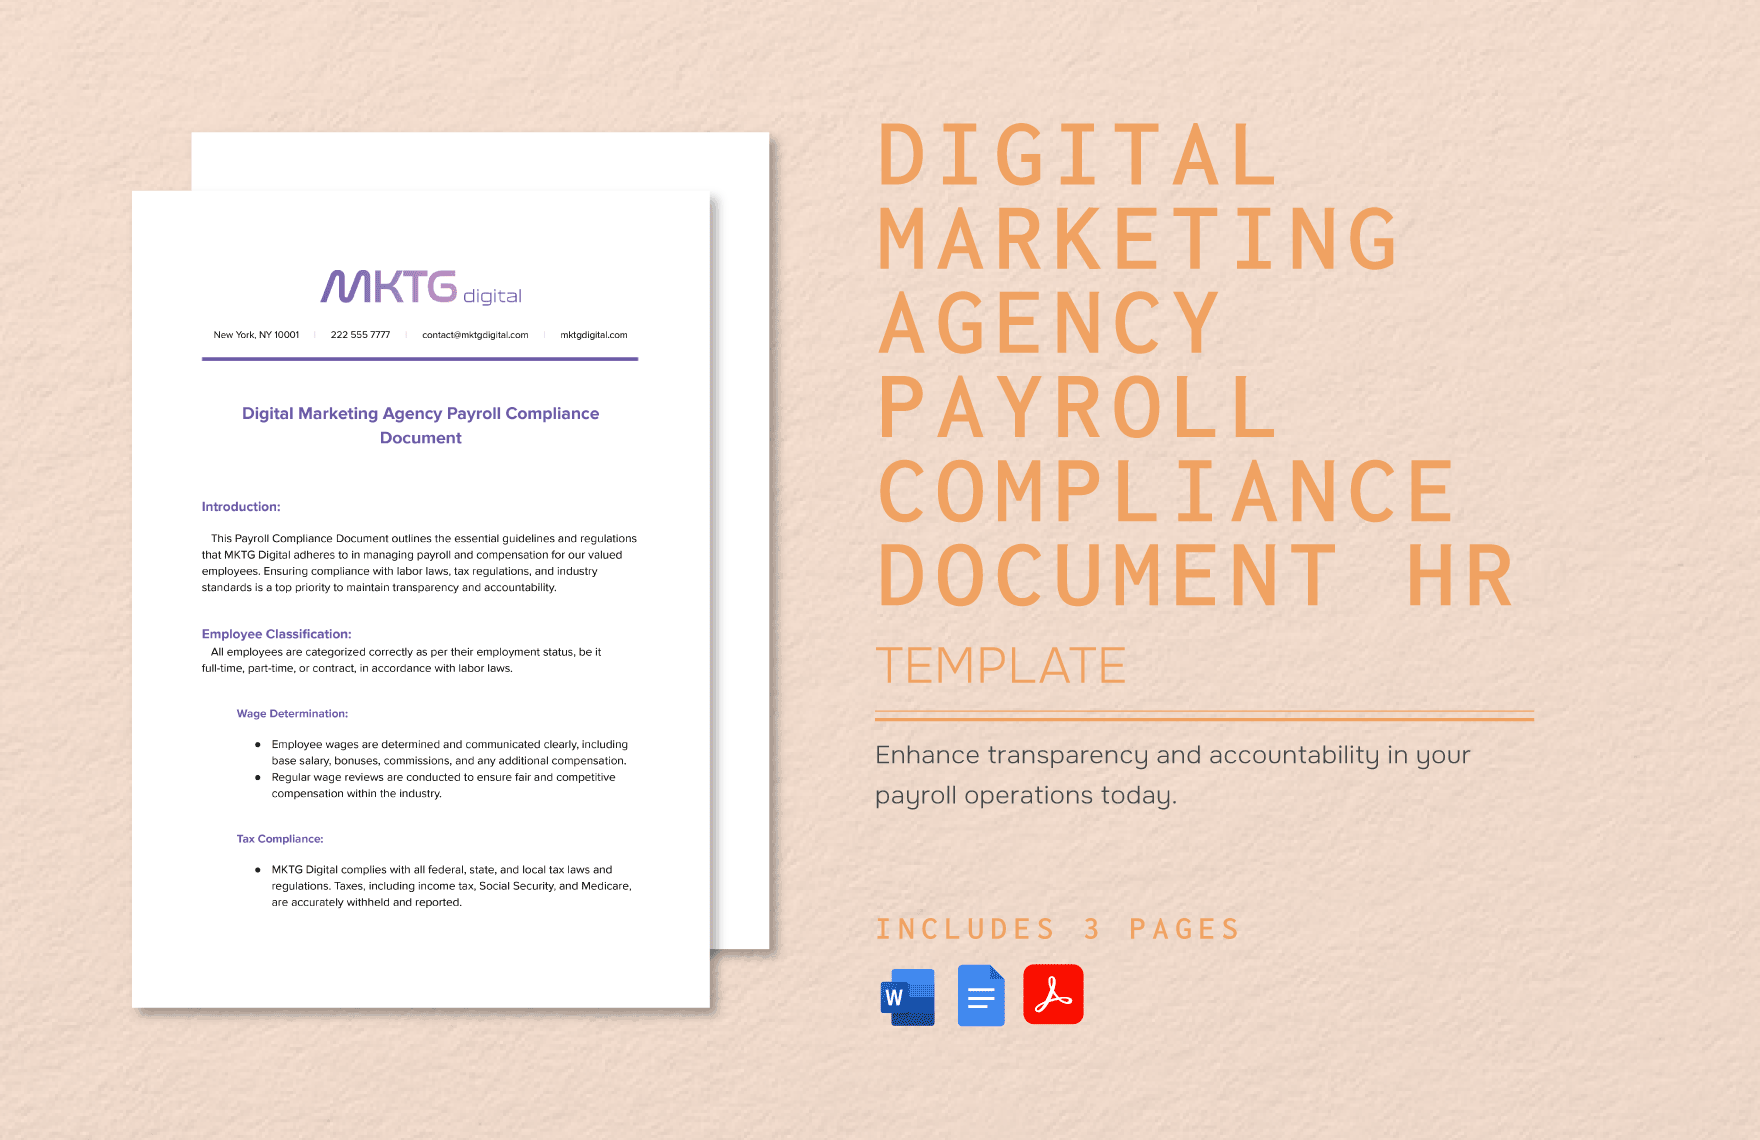 Digital Marketing Agency Payroll Compliance Document HR Template in Word, Google Docs, PDF